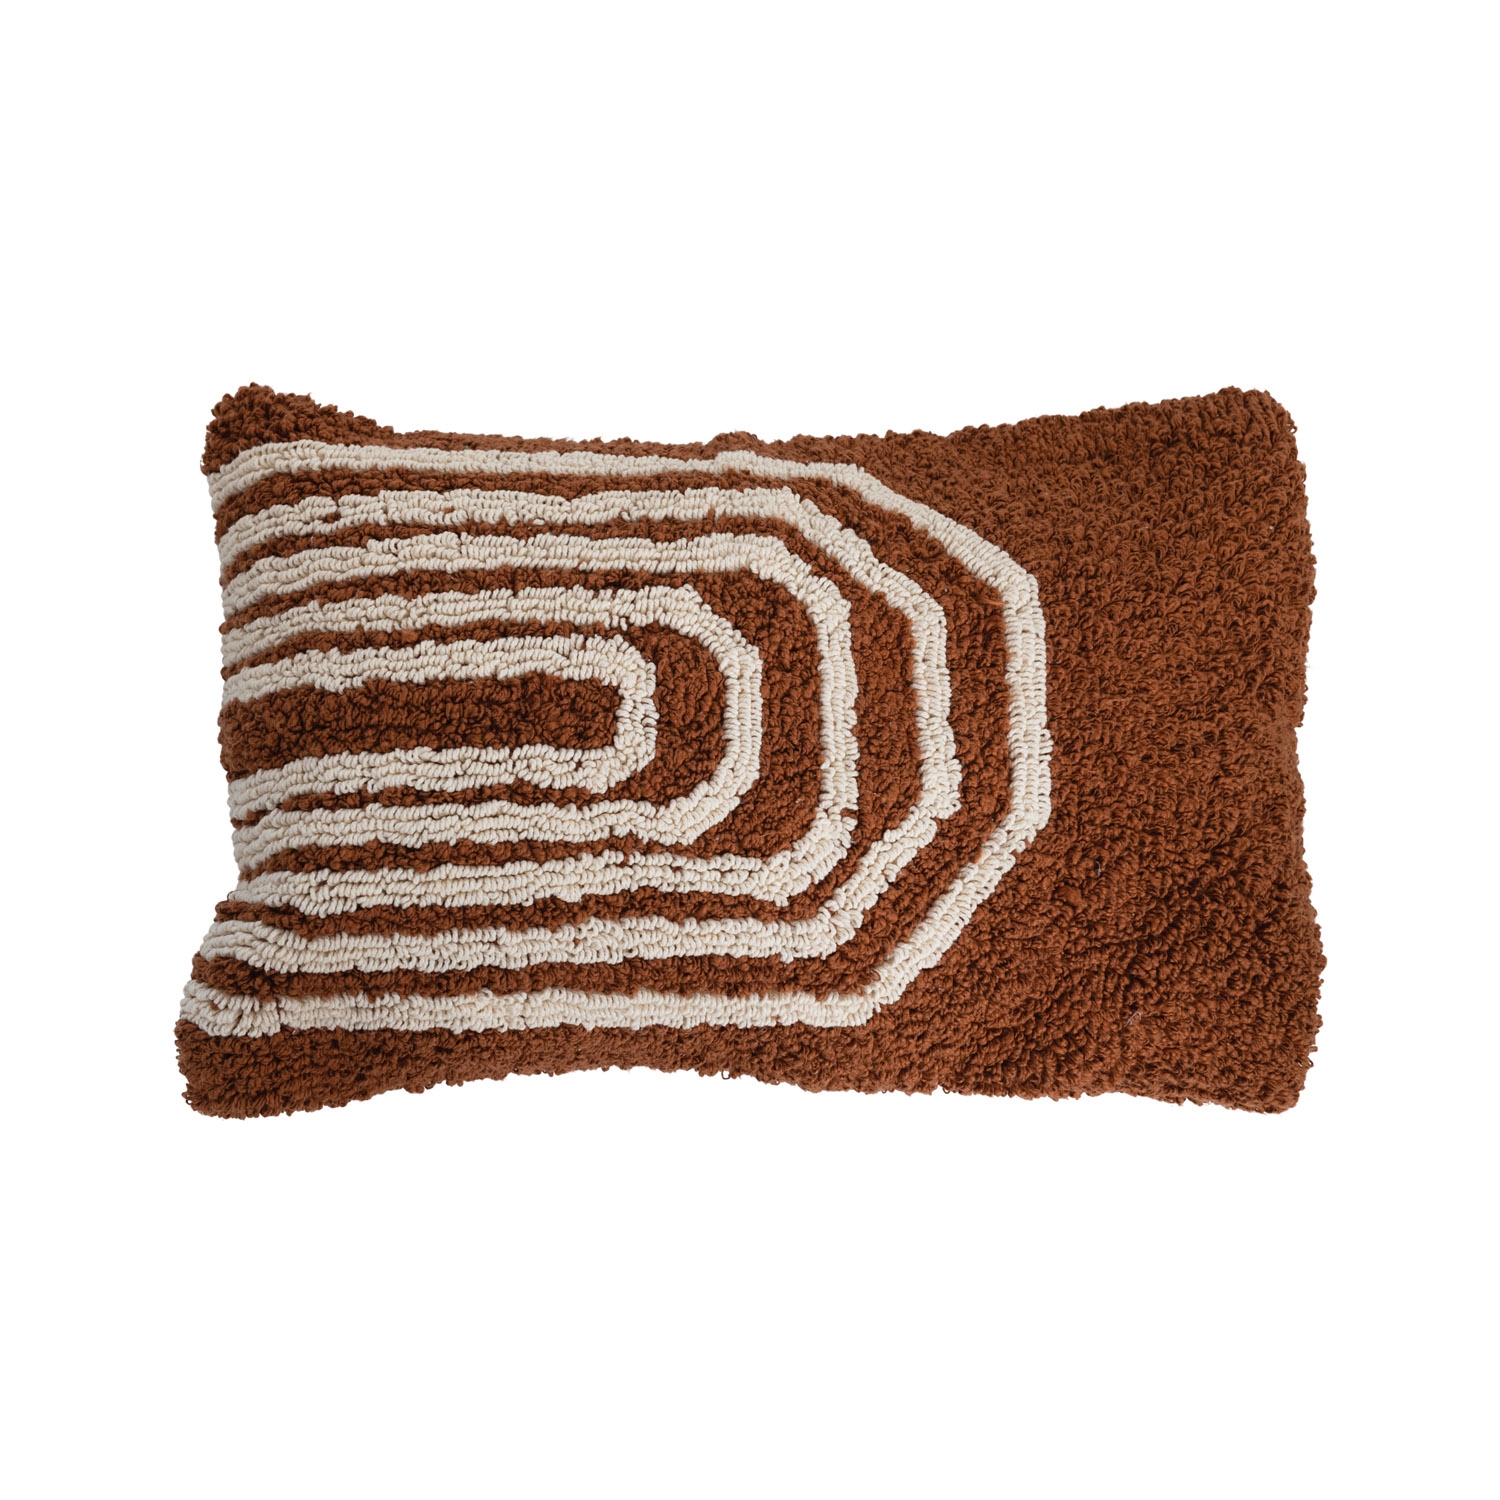 Cotton Tufted Lumbar Pillow with Geometric Design - Image 0